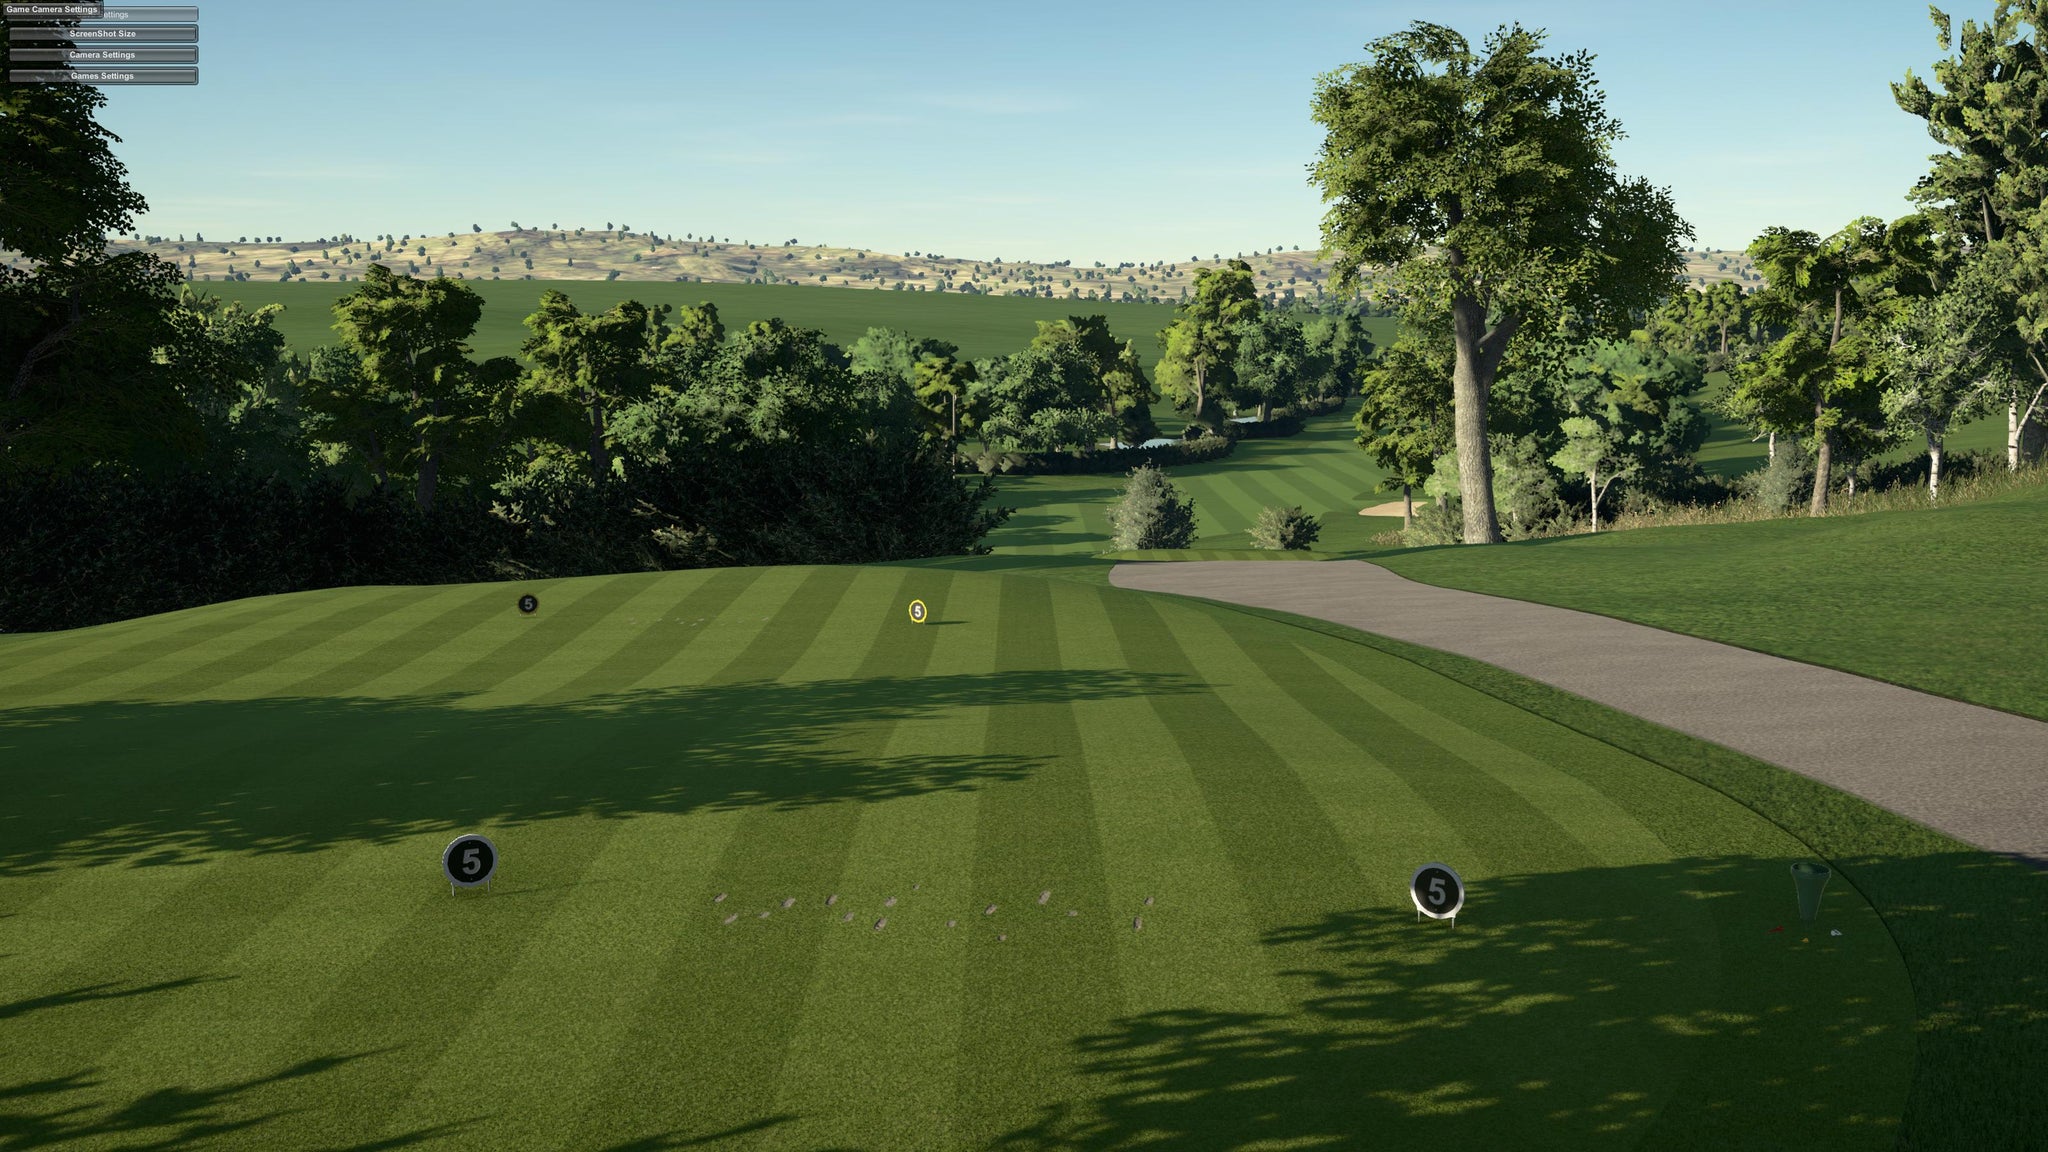 TGC2019 Logiciel de simulation de golf 